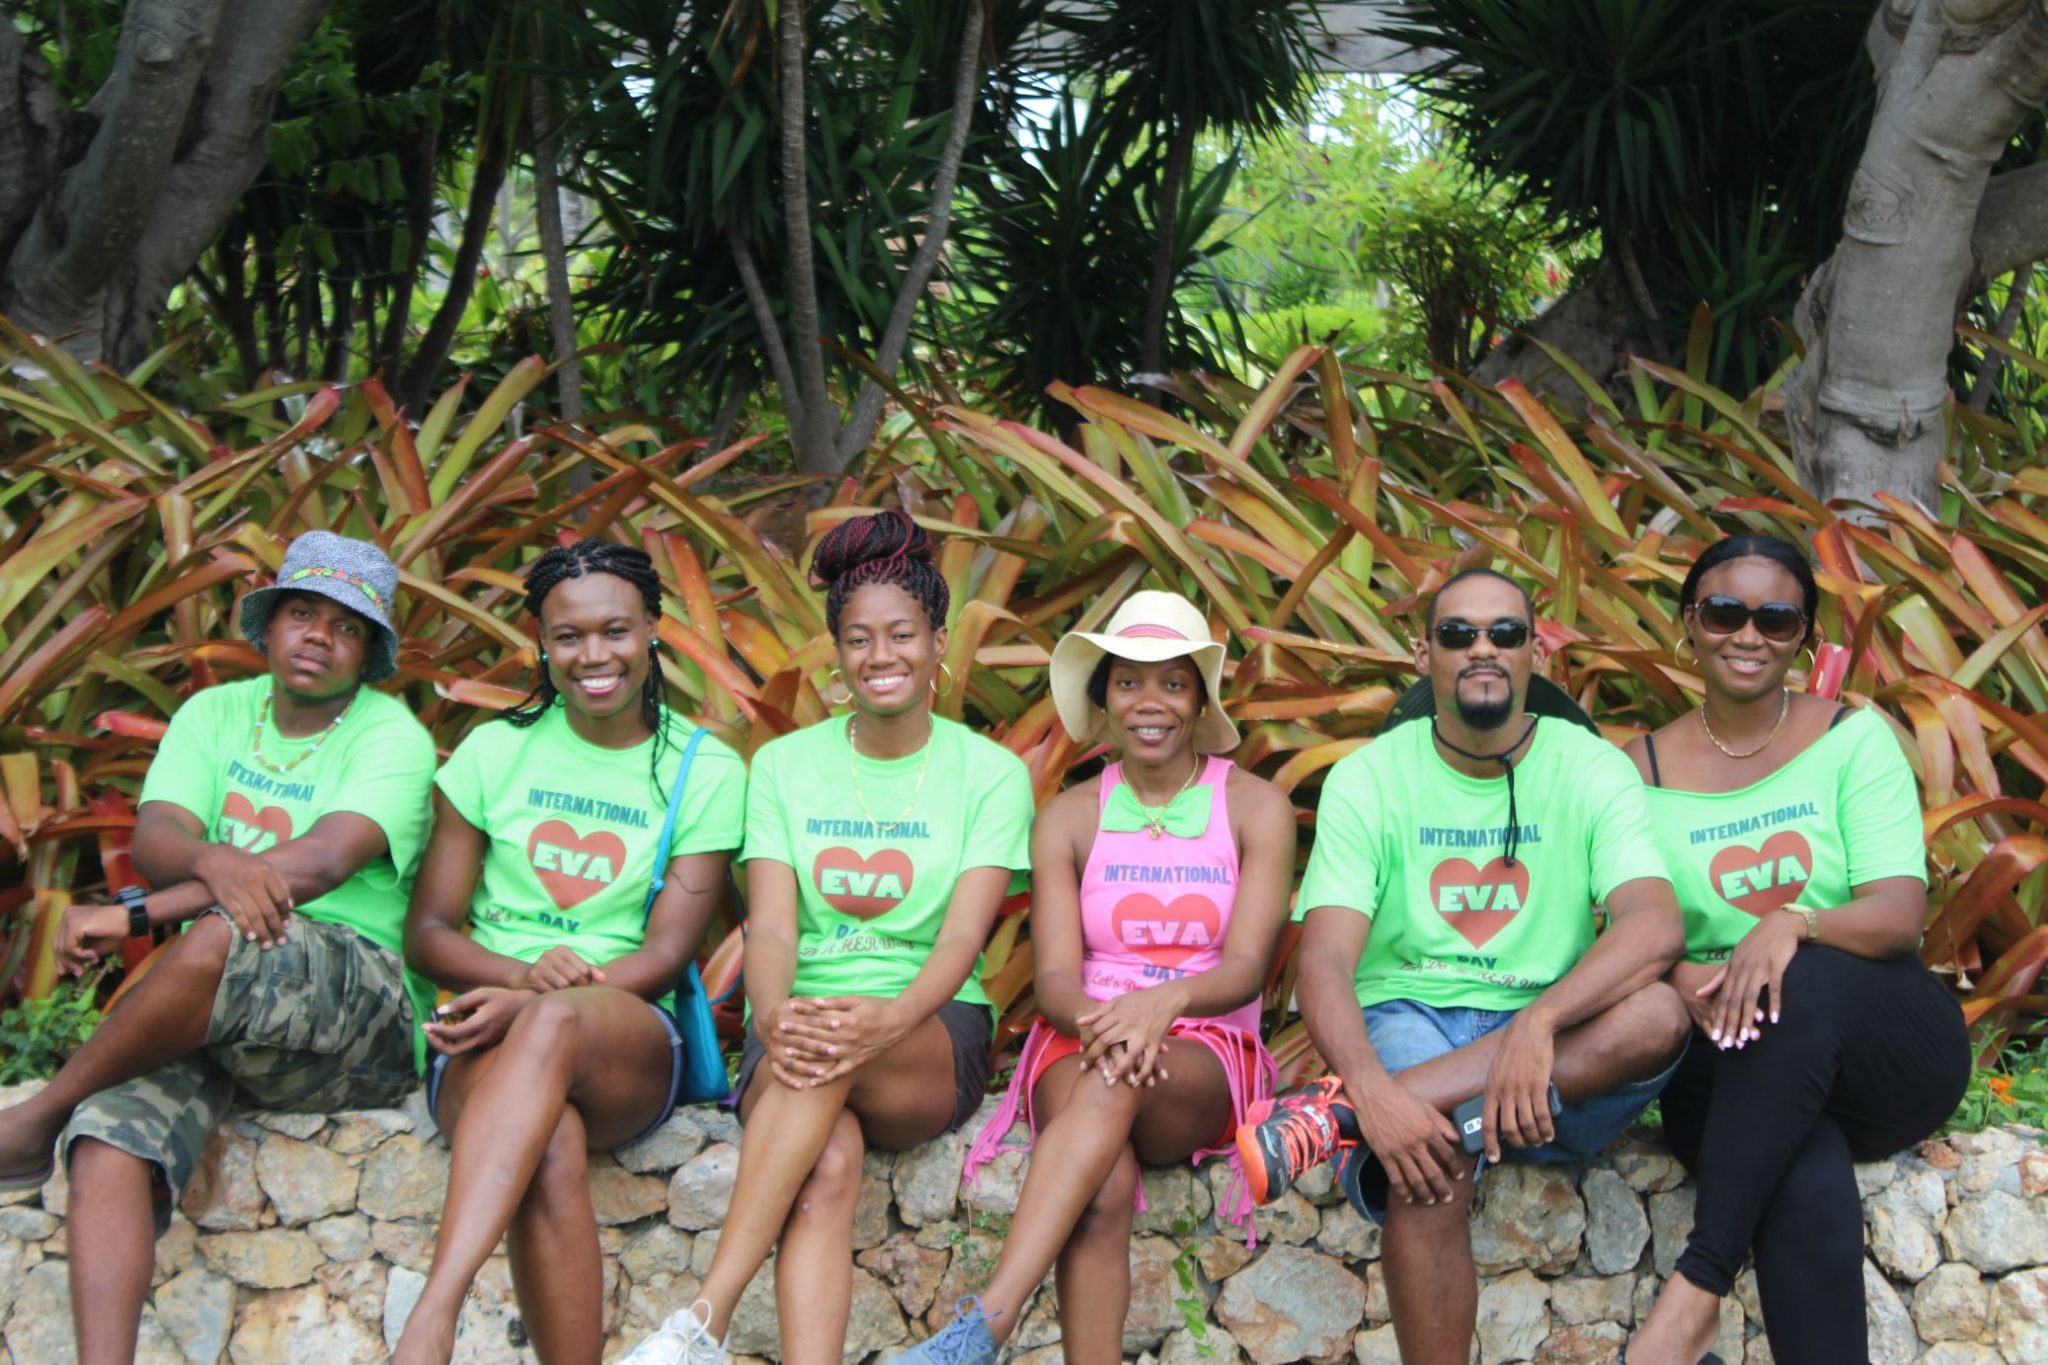 Around Anguilla Fun for International Eva Day!